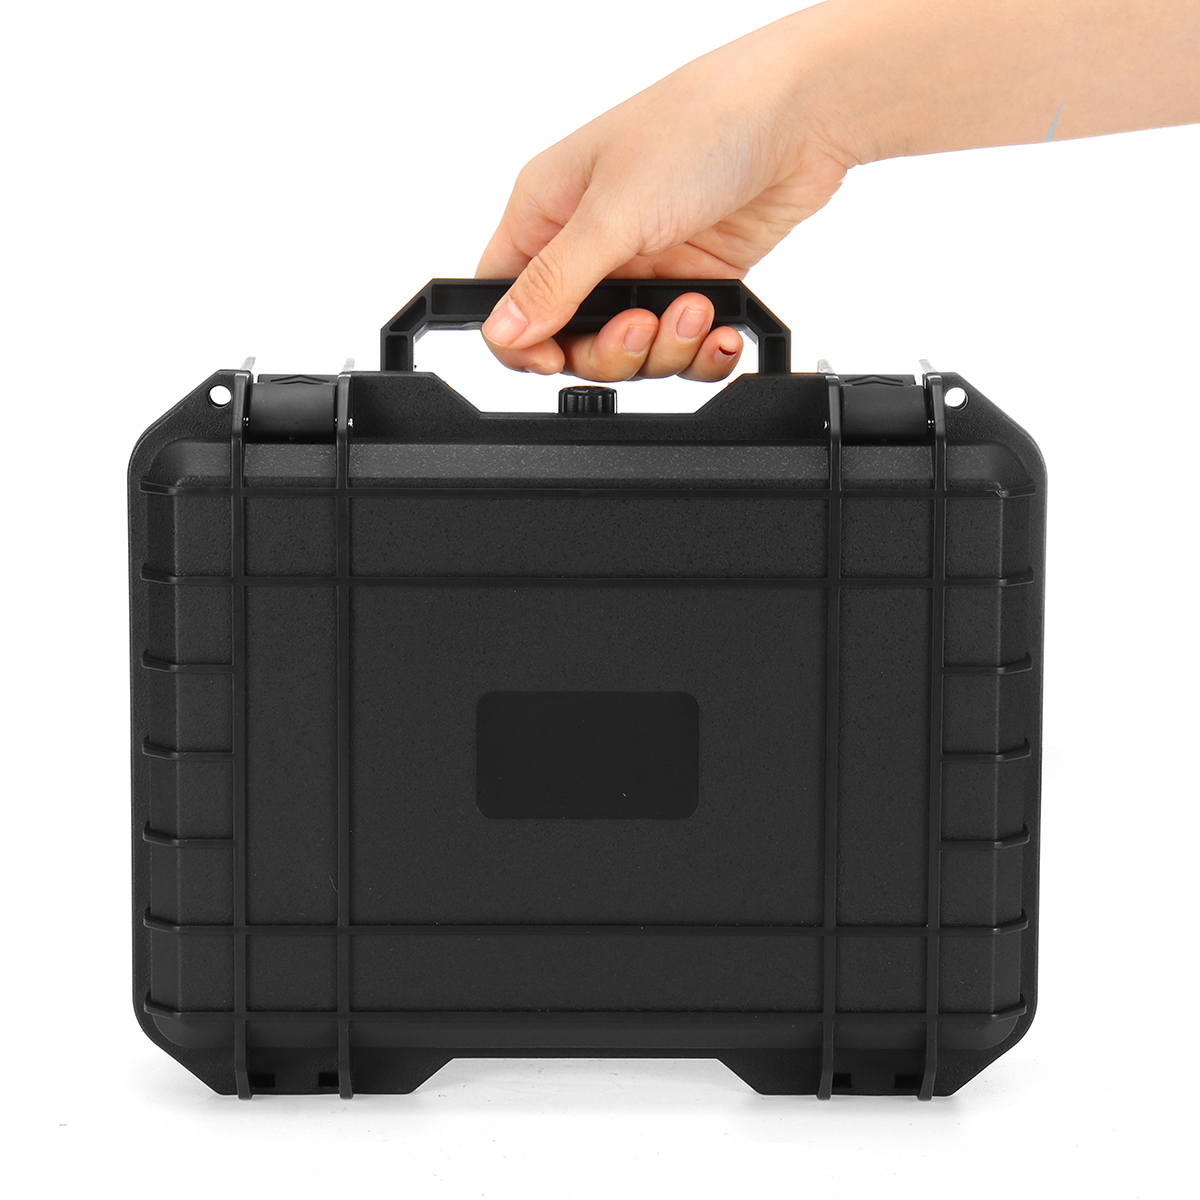 Waterproof-Hard-Carry-Case-Tool-Kits-Impact-Resistant-Shockproof-Storage-Box-New-1658756-5